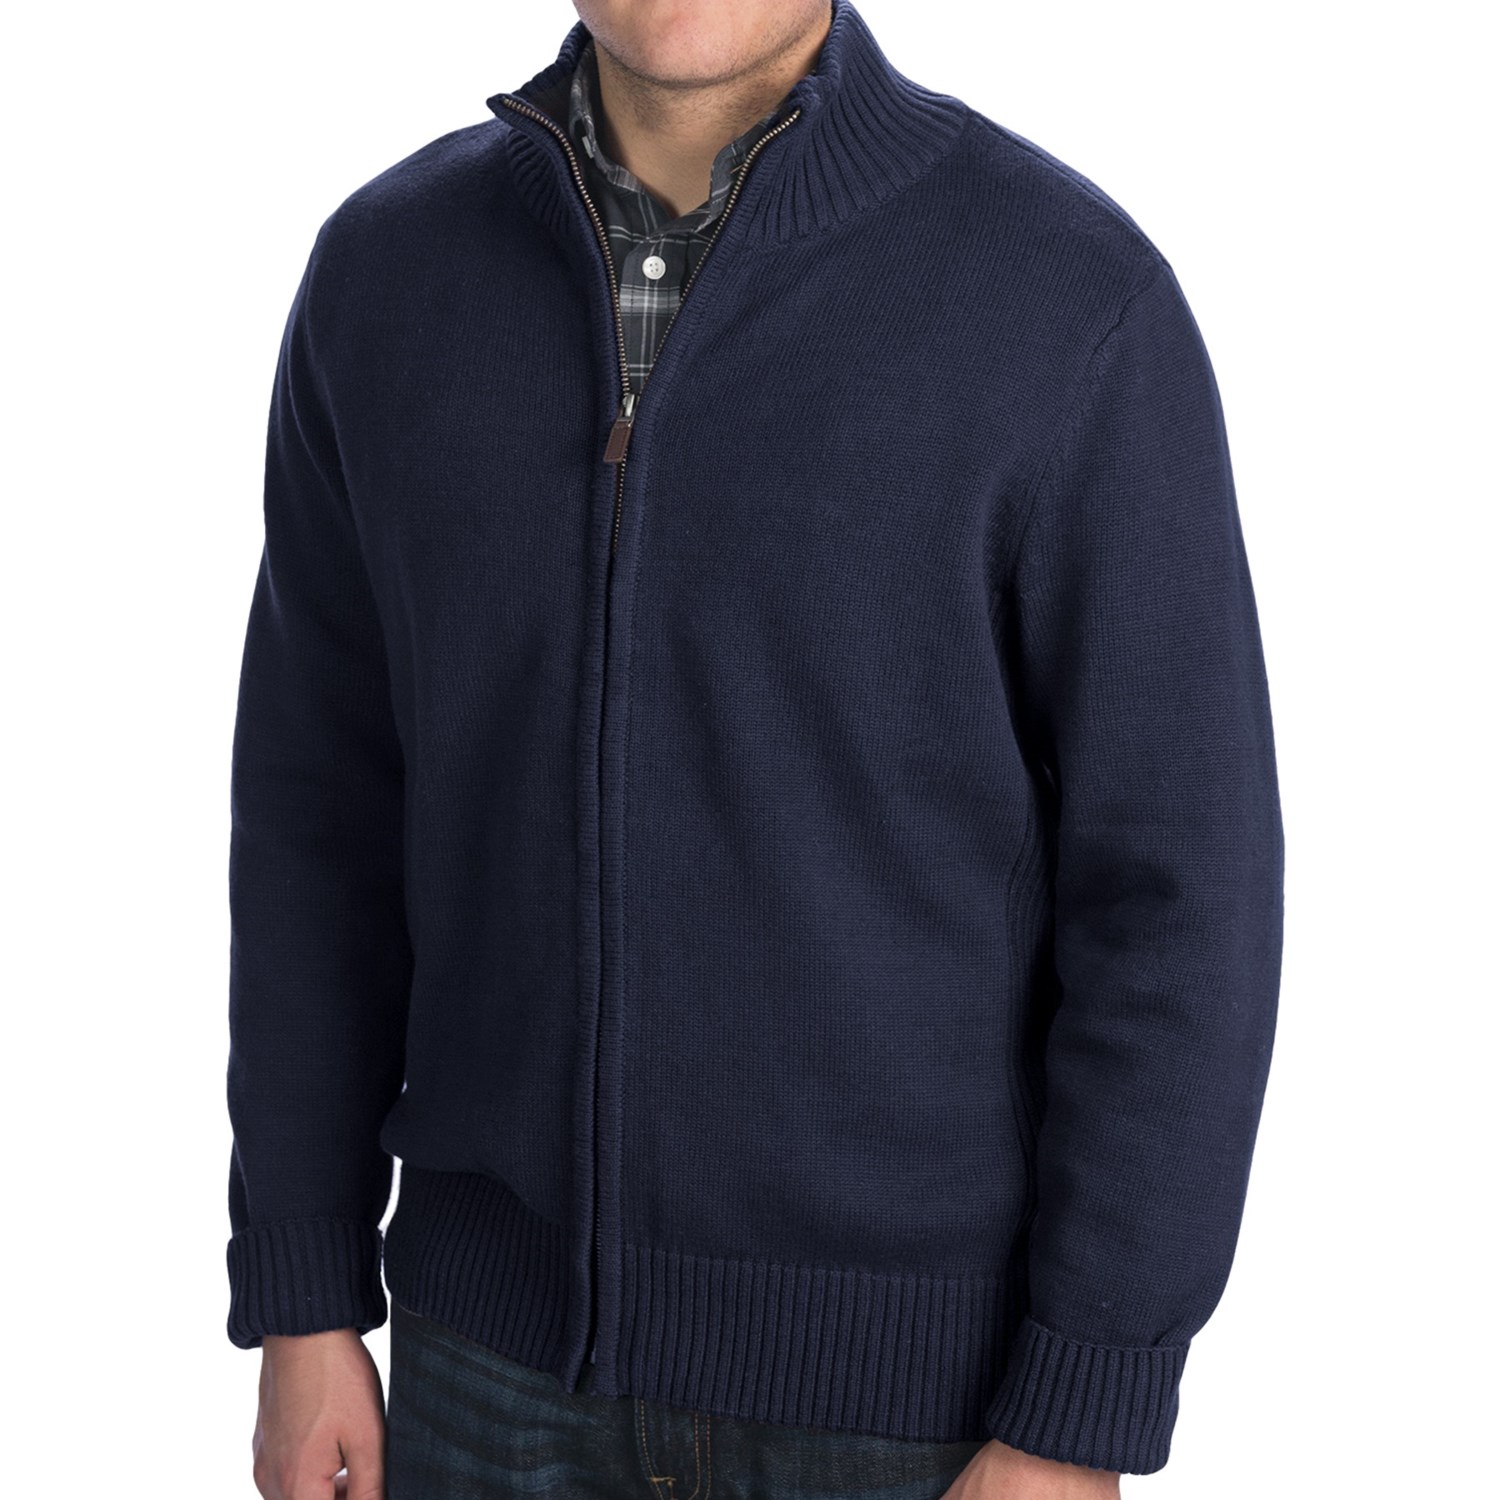 Dockers Cotton Zip Cardigan Sweater (For Men) - Save 38%